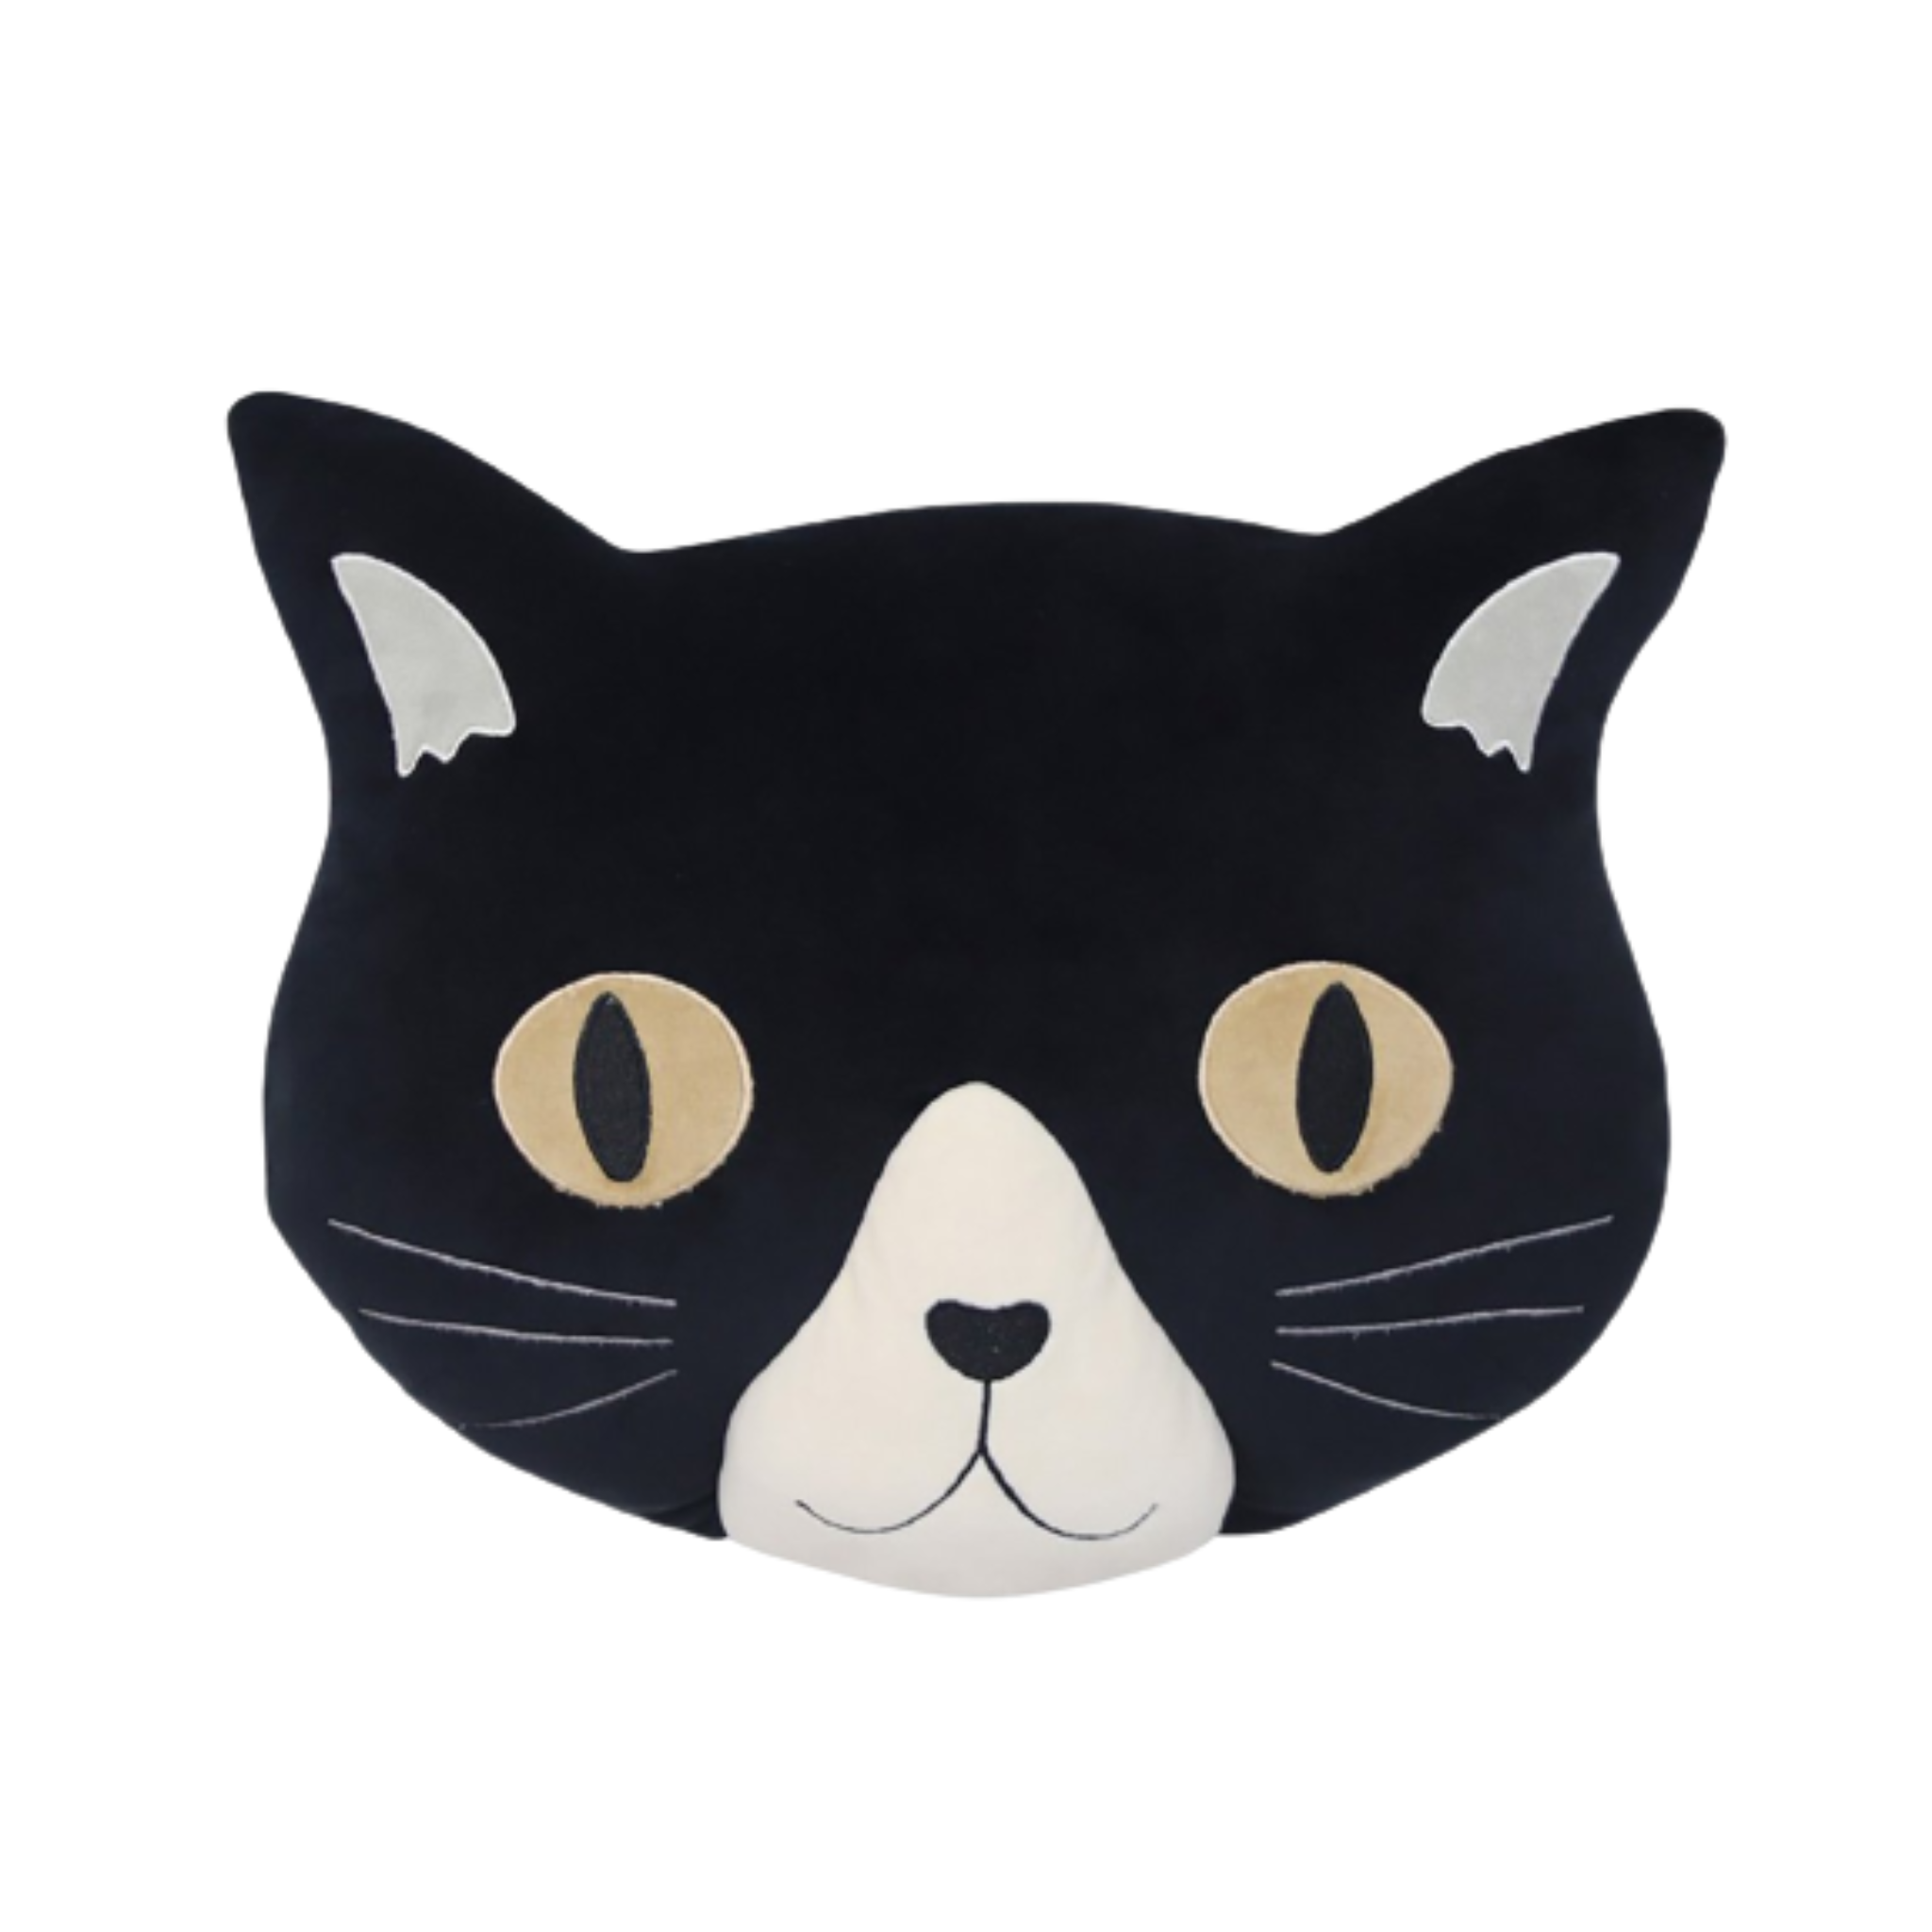 Kitty Face Cushion black